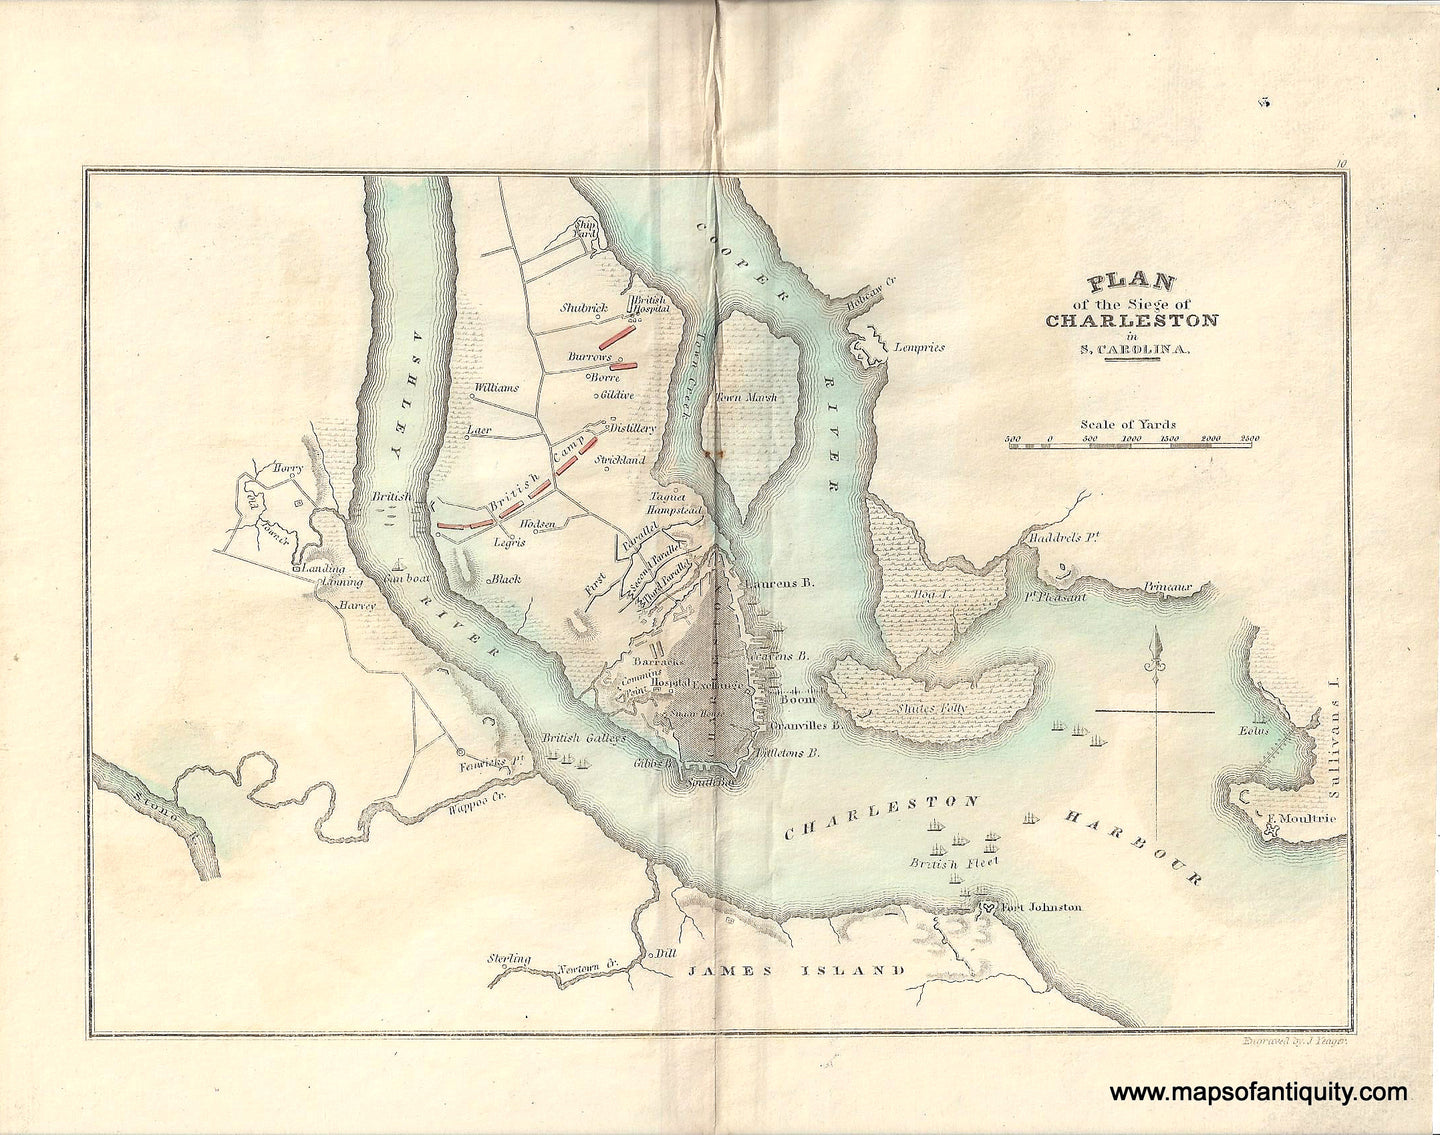 Antique-Map-Siege-Charleston-SC-South-Carolina-Marshall-revolutionary-war-life-George-Washington-1827-1820s-1800s-19th-century-Maps-of-Antiquity